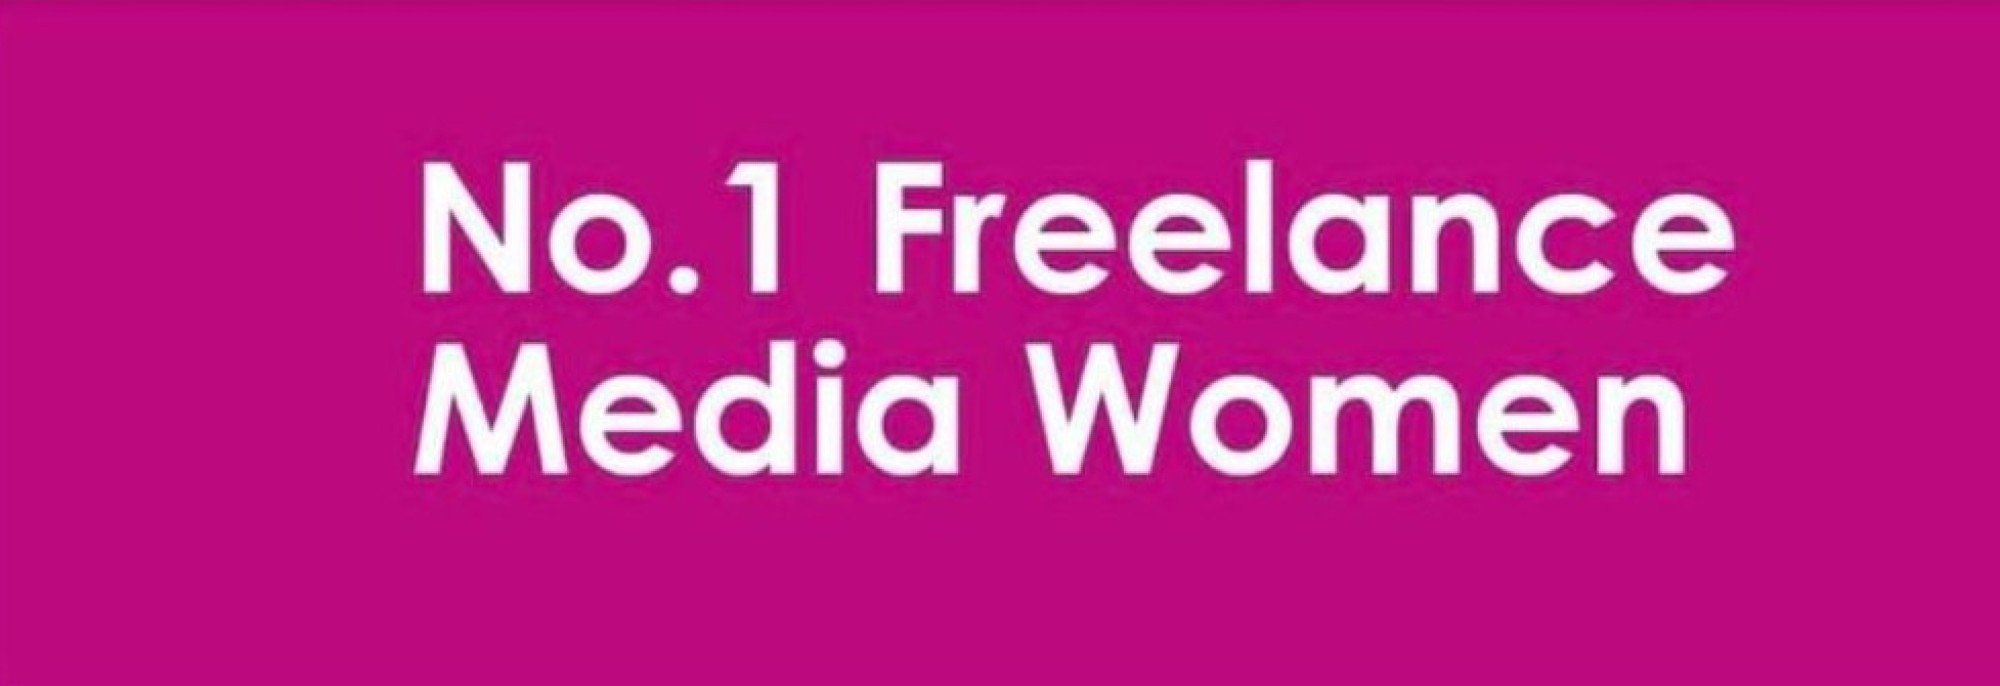 <img src="no1.jpg" alt="no1 freelance media women group"/> 